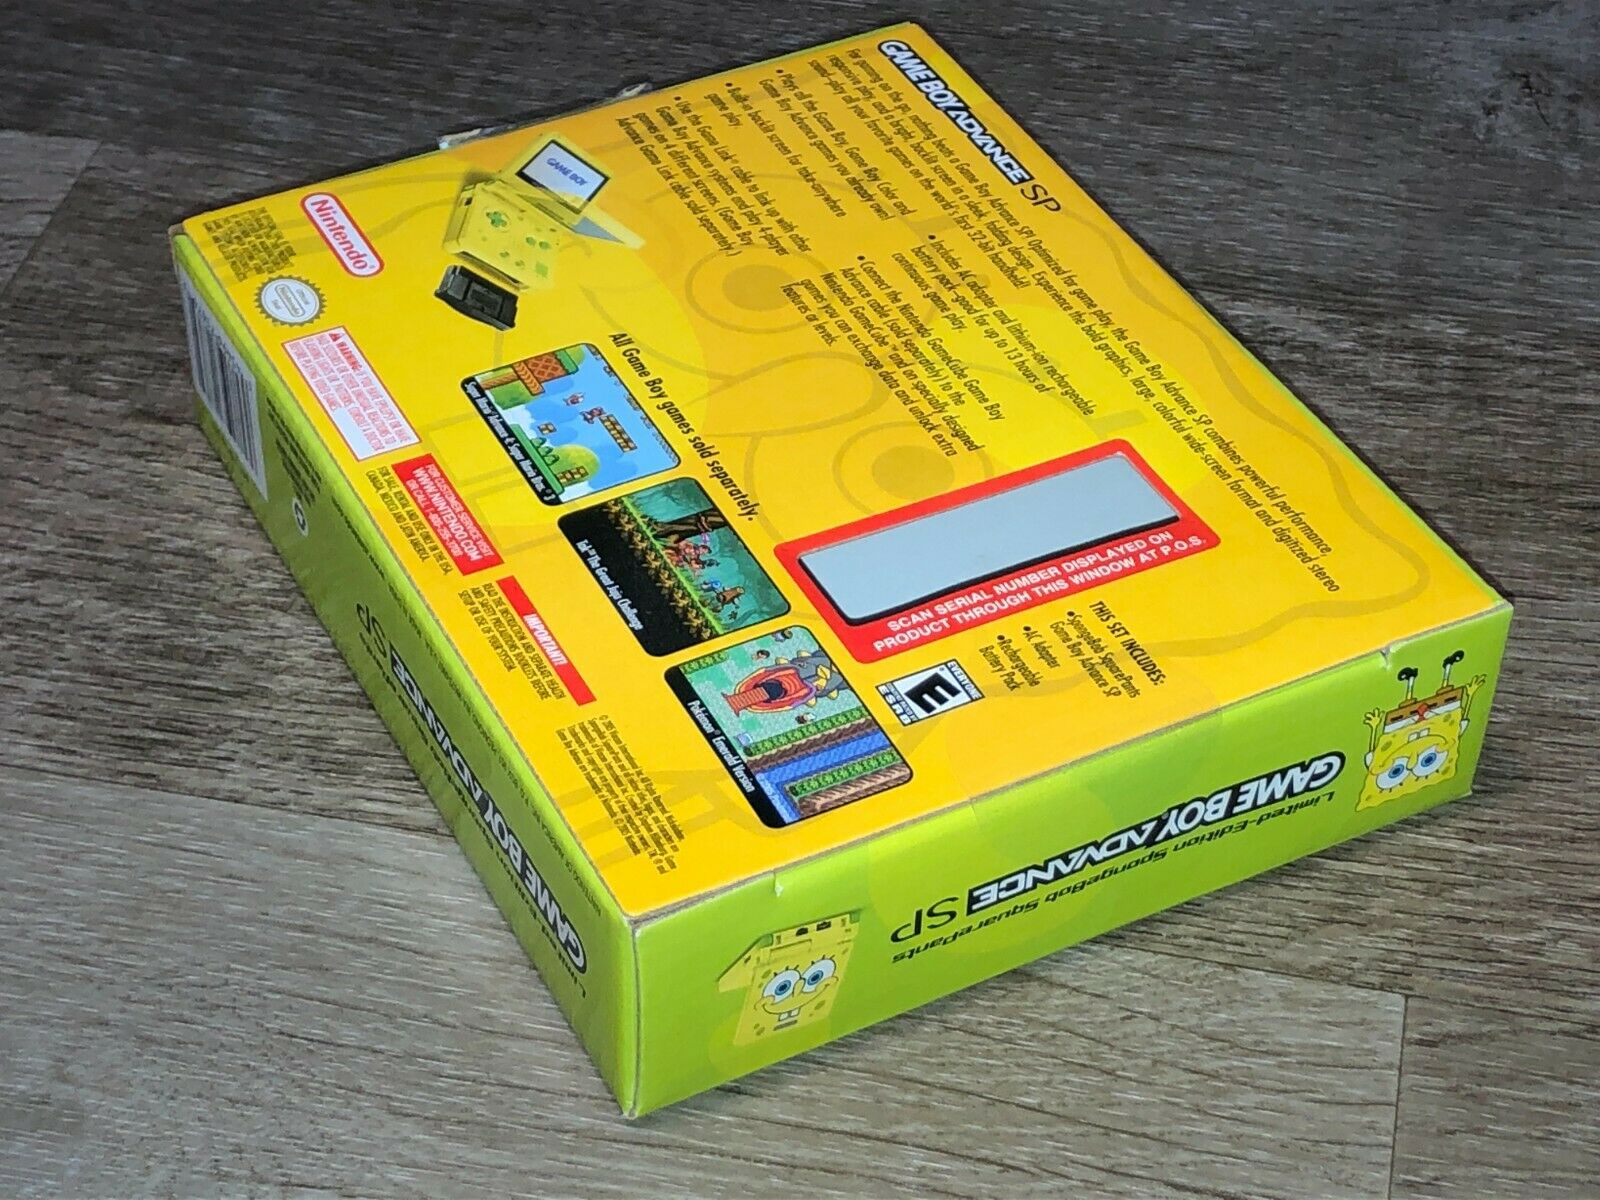 Game Boy Advance SP SpongeBob упаковка